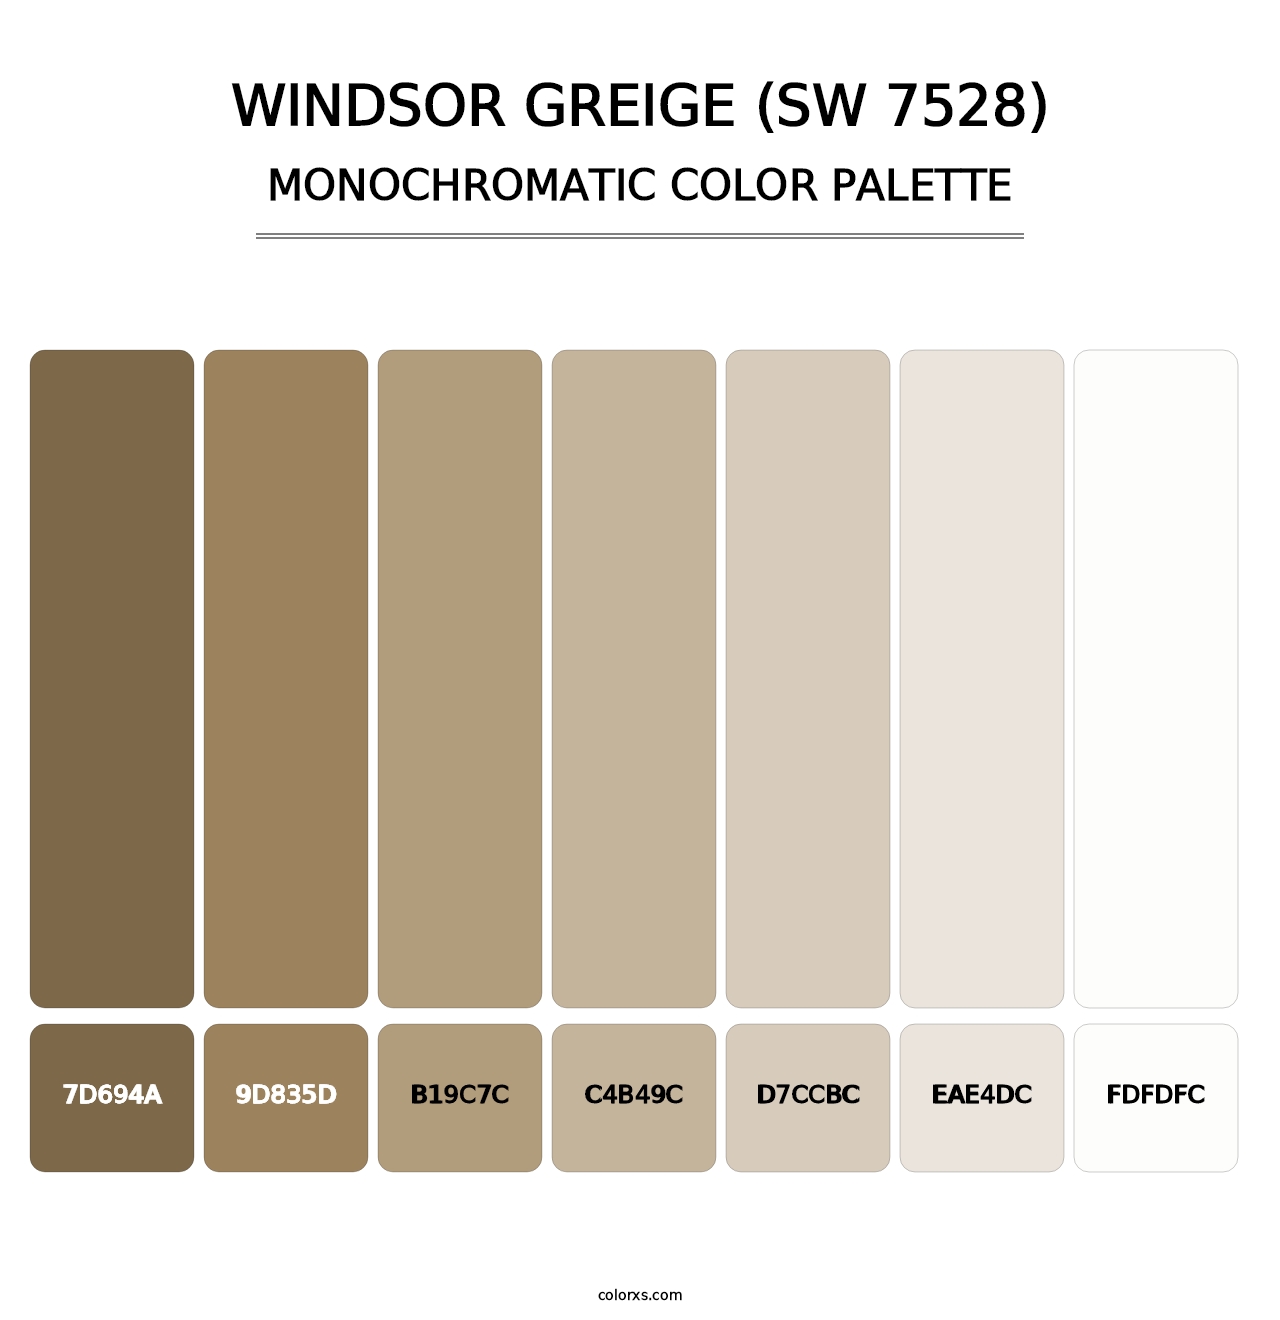 Windsor Greige (SW 7528) - Monochromatic Color Palette